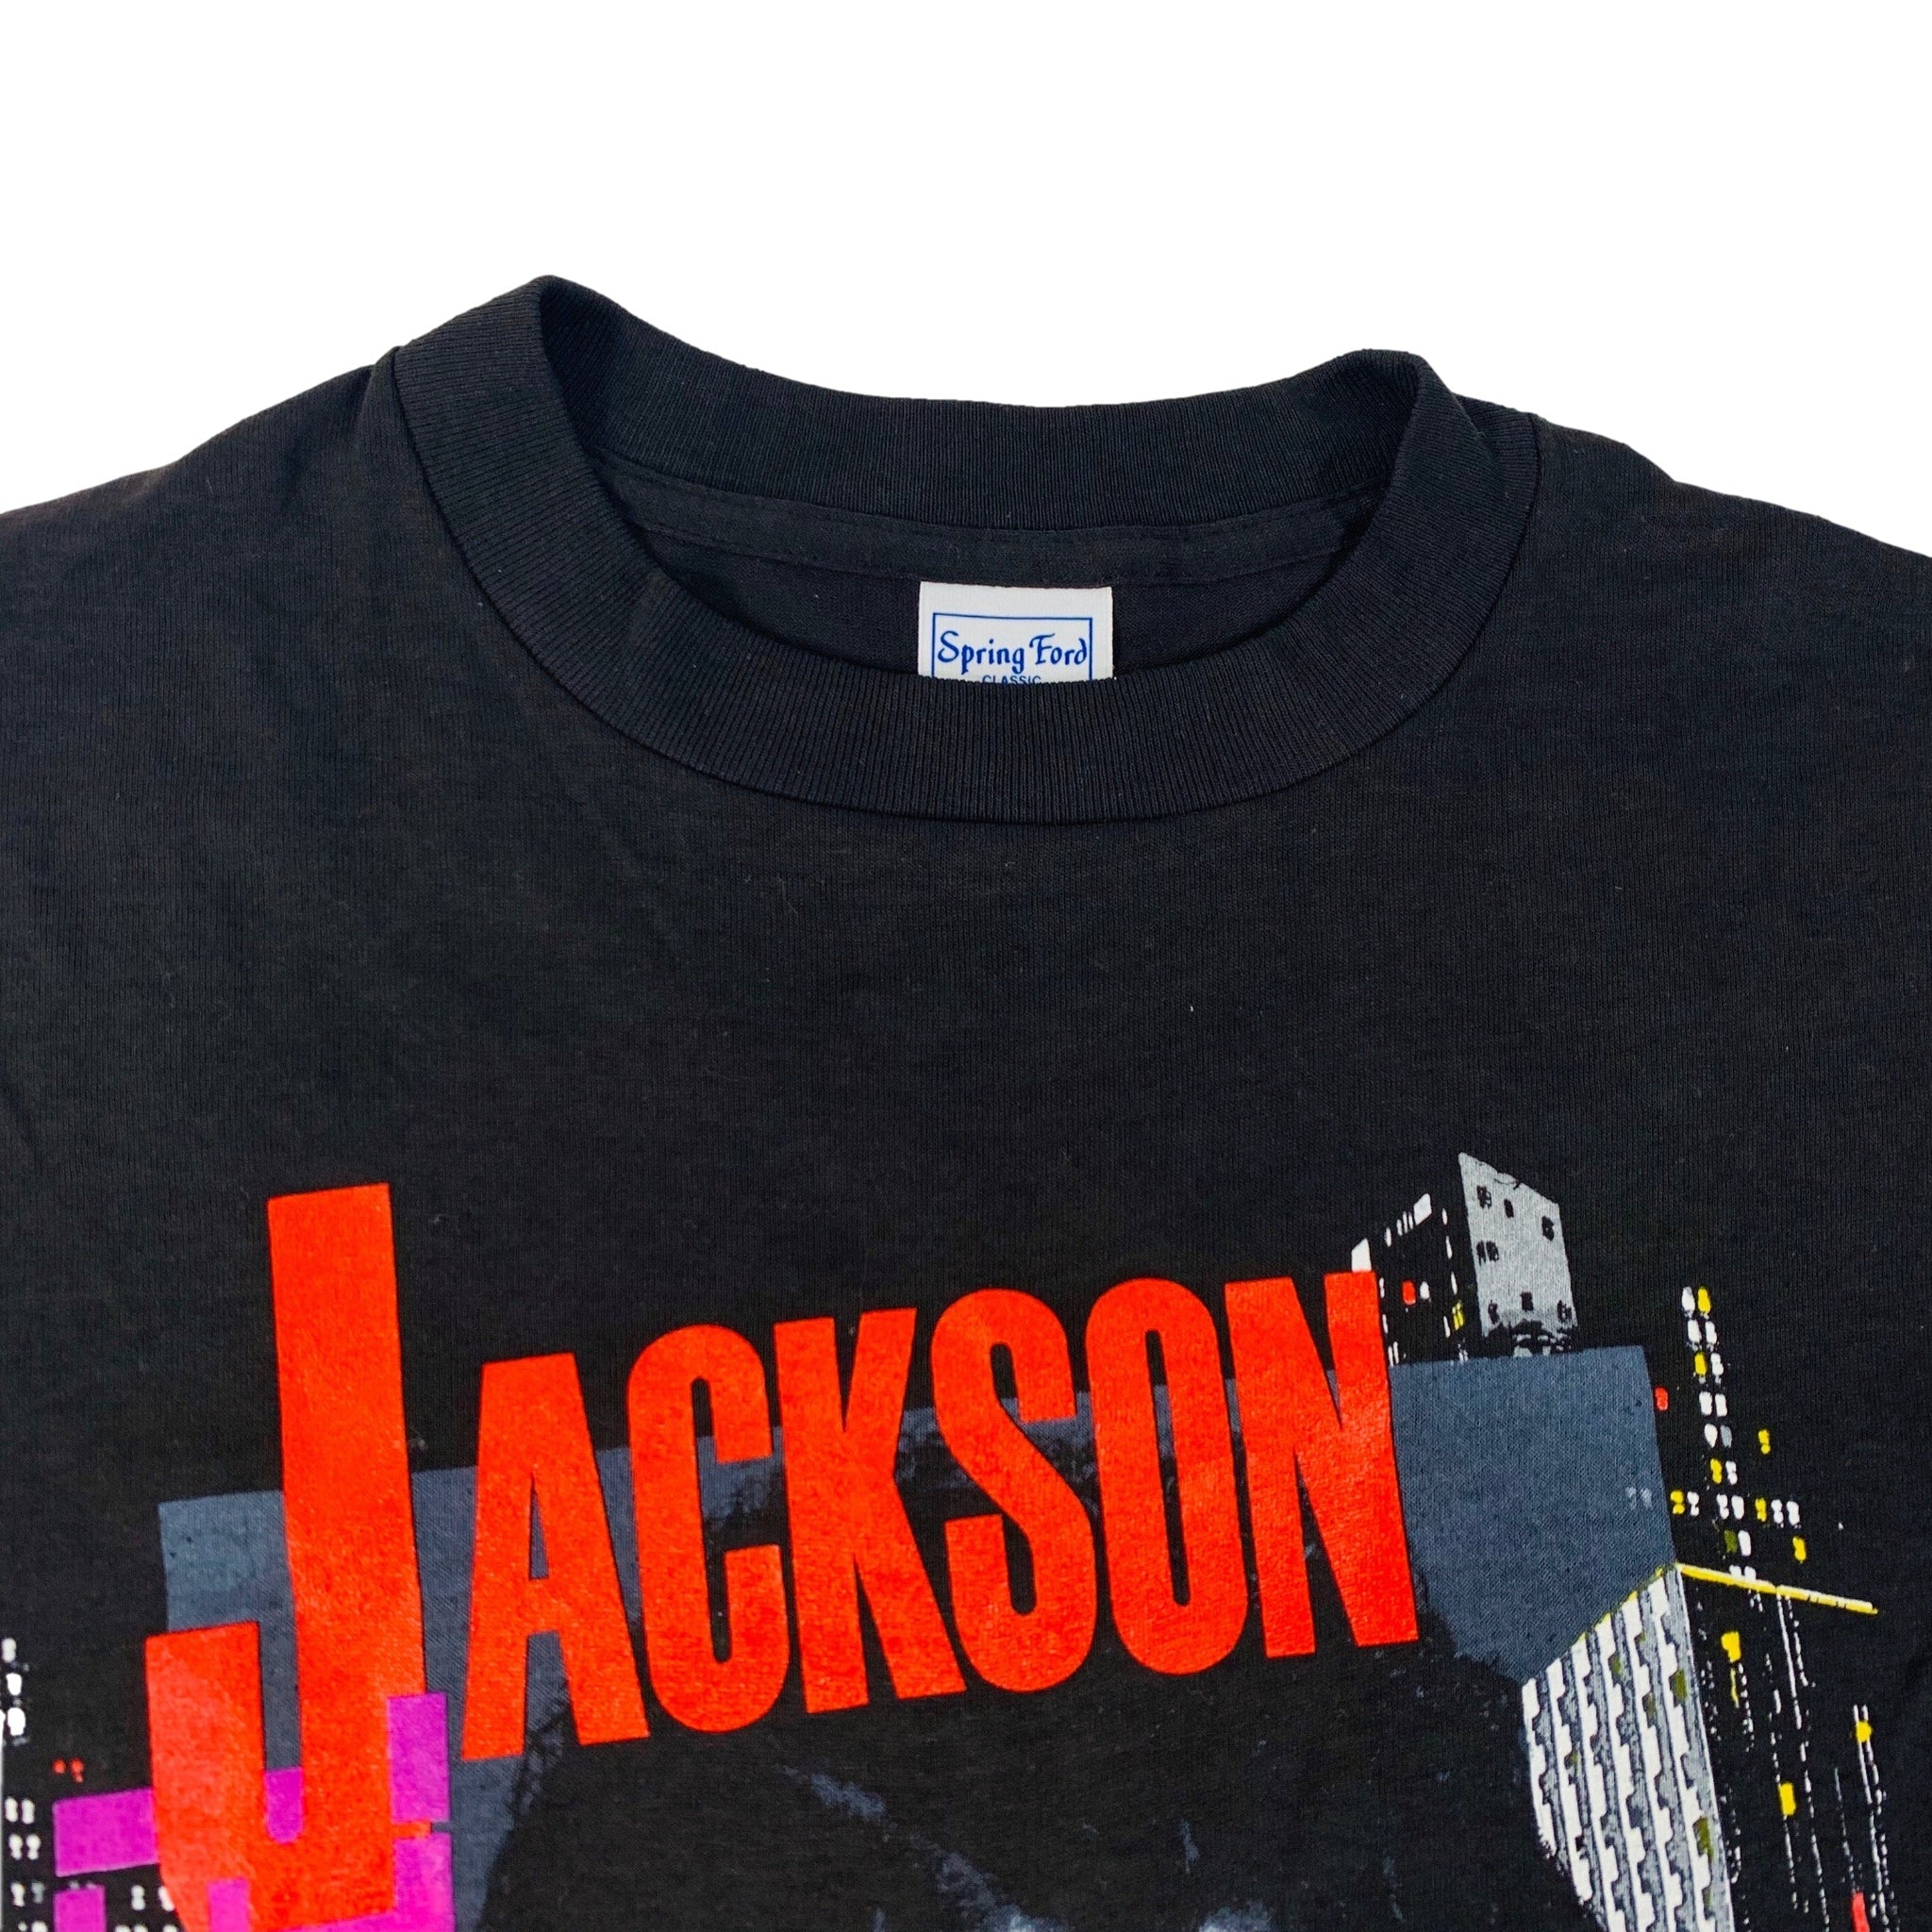 Michael Jackson Shirt - Vintage & Classic Tee